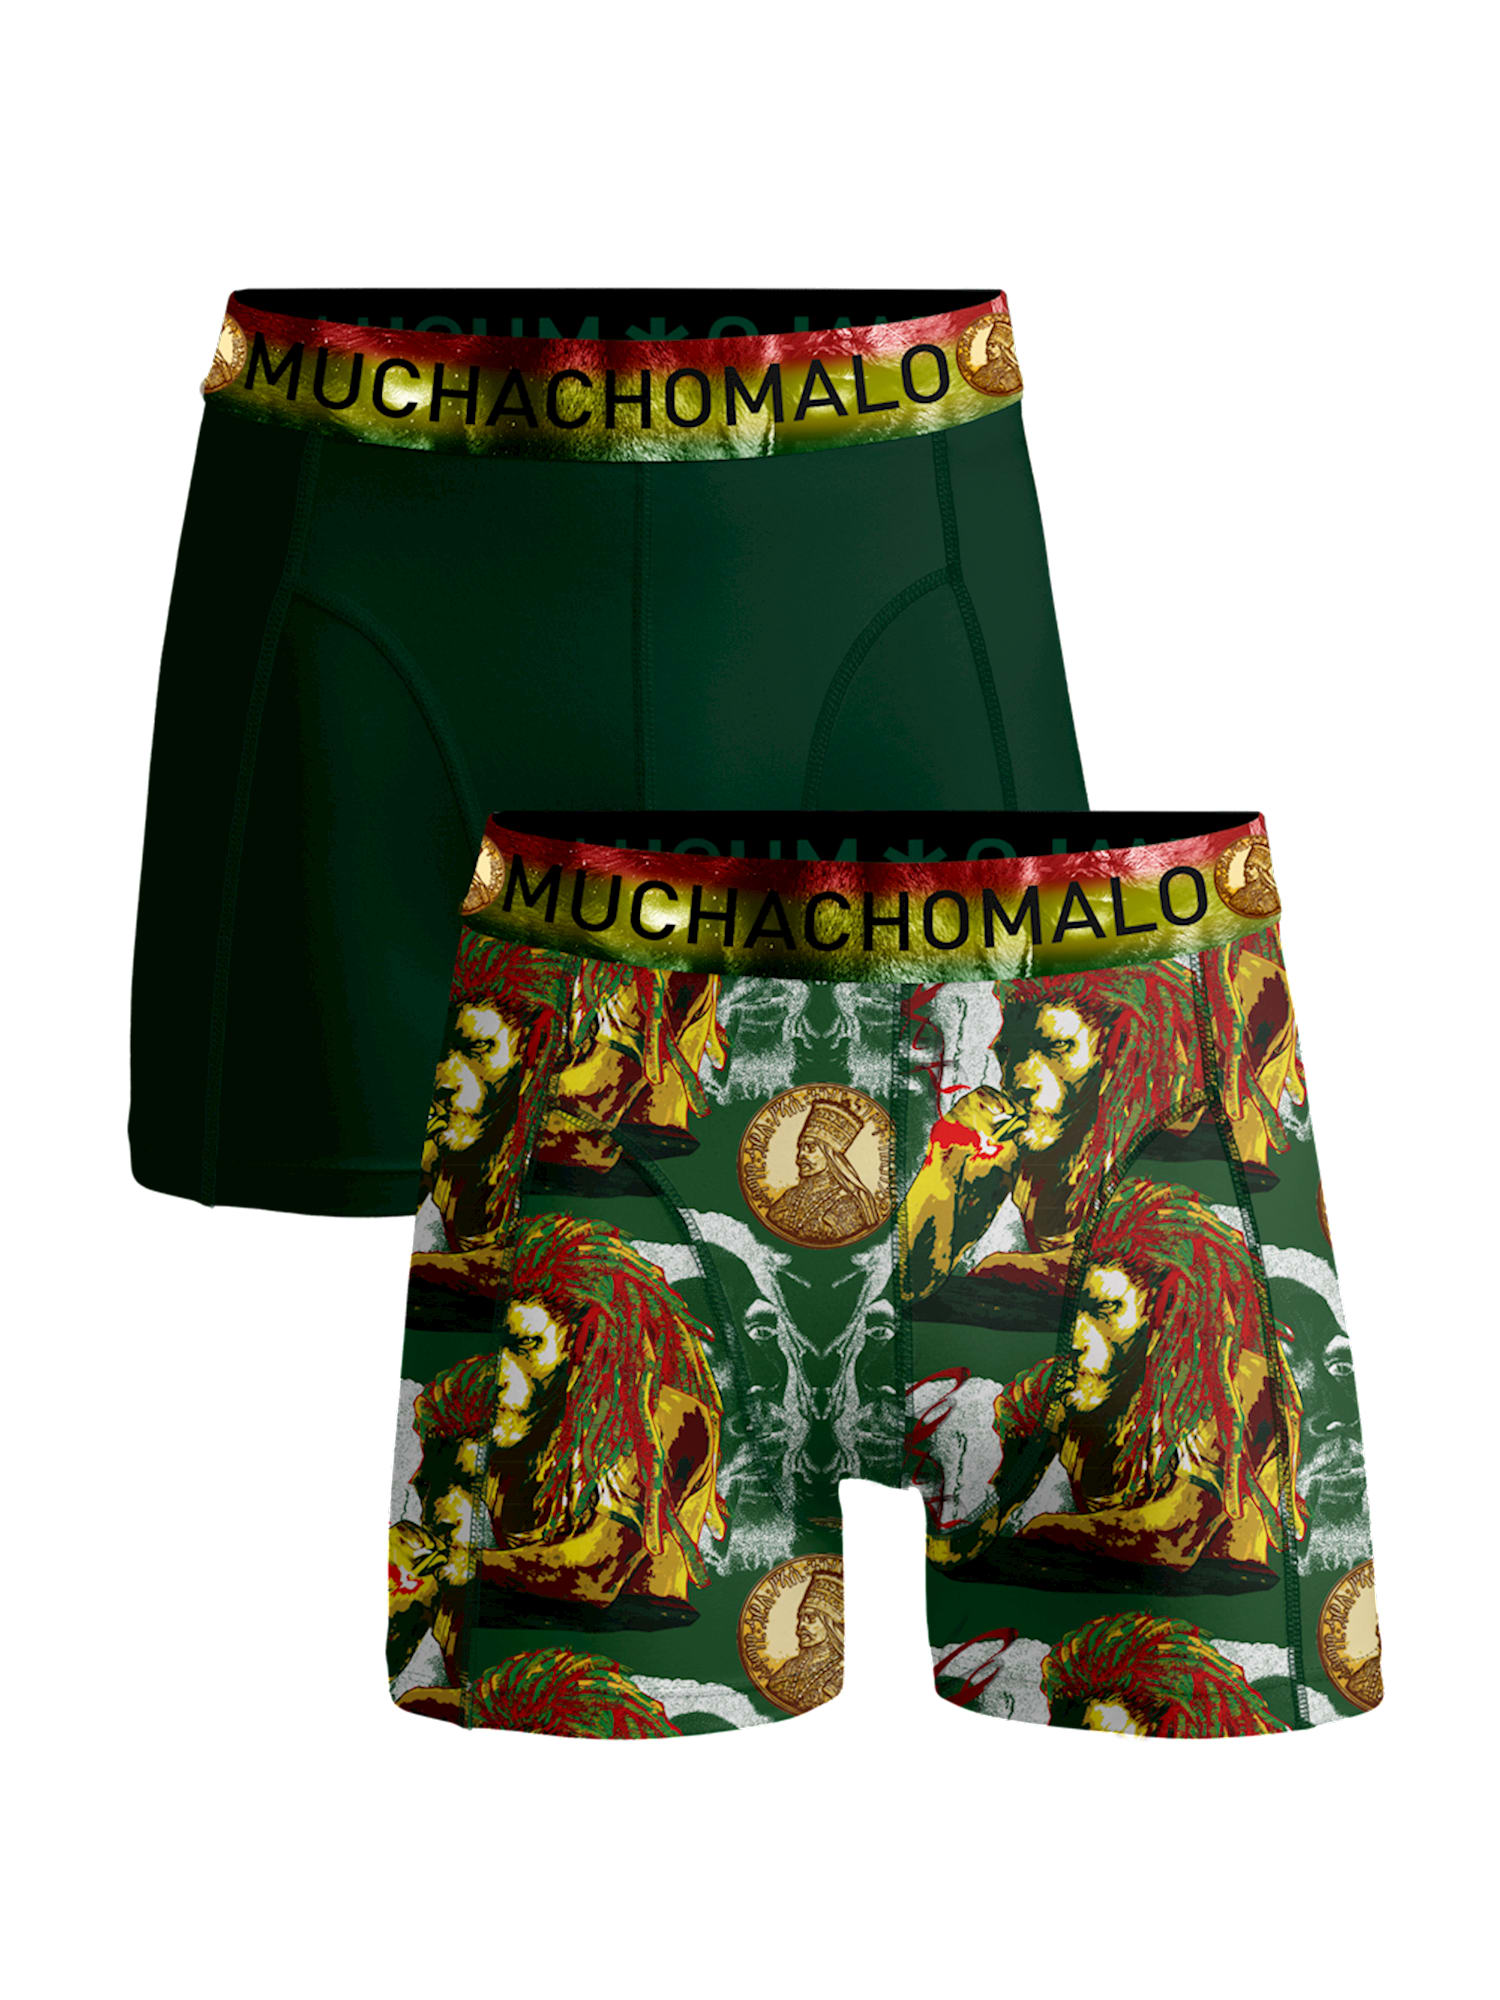 Боксеры Muchachomalo 2er-Set: Boxershorts, цвет Multicolor/Green боксеры muchachomalo 2er set boxershorts цвет multicolor blue